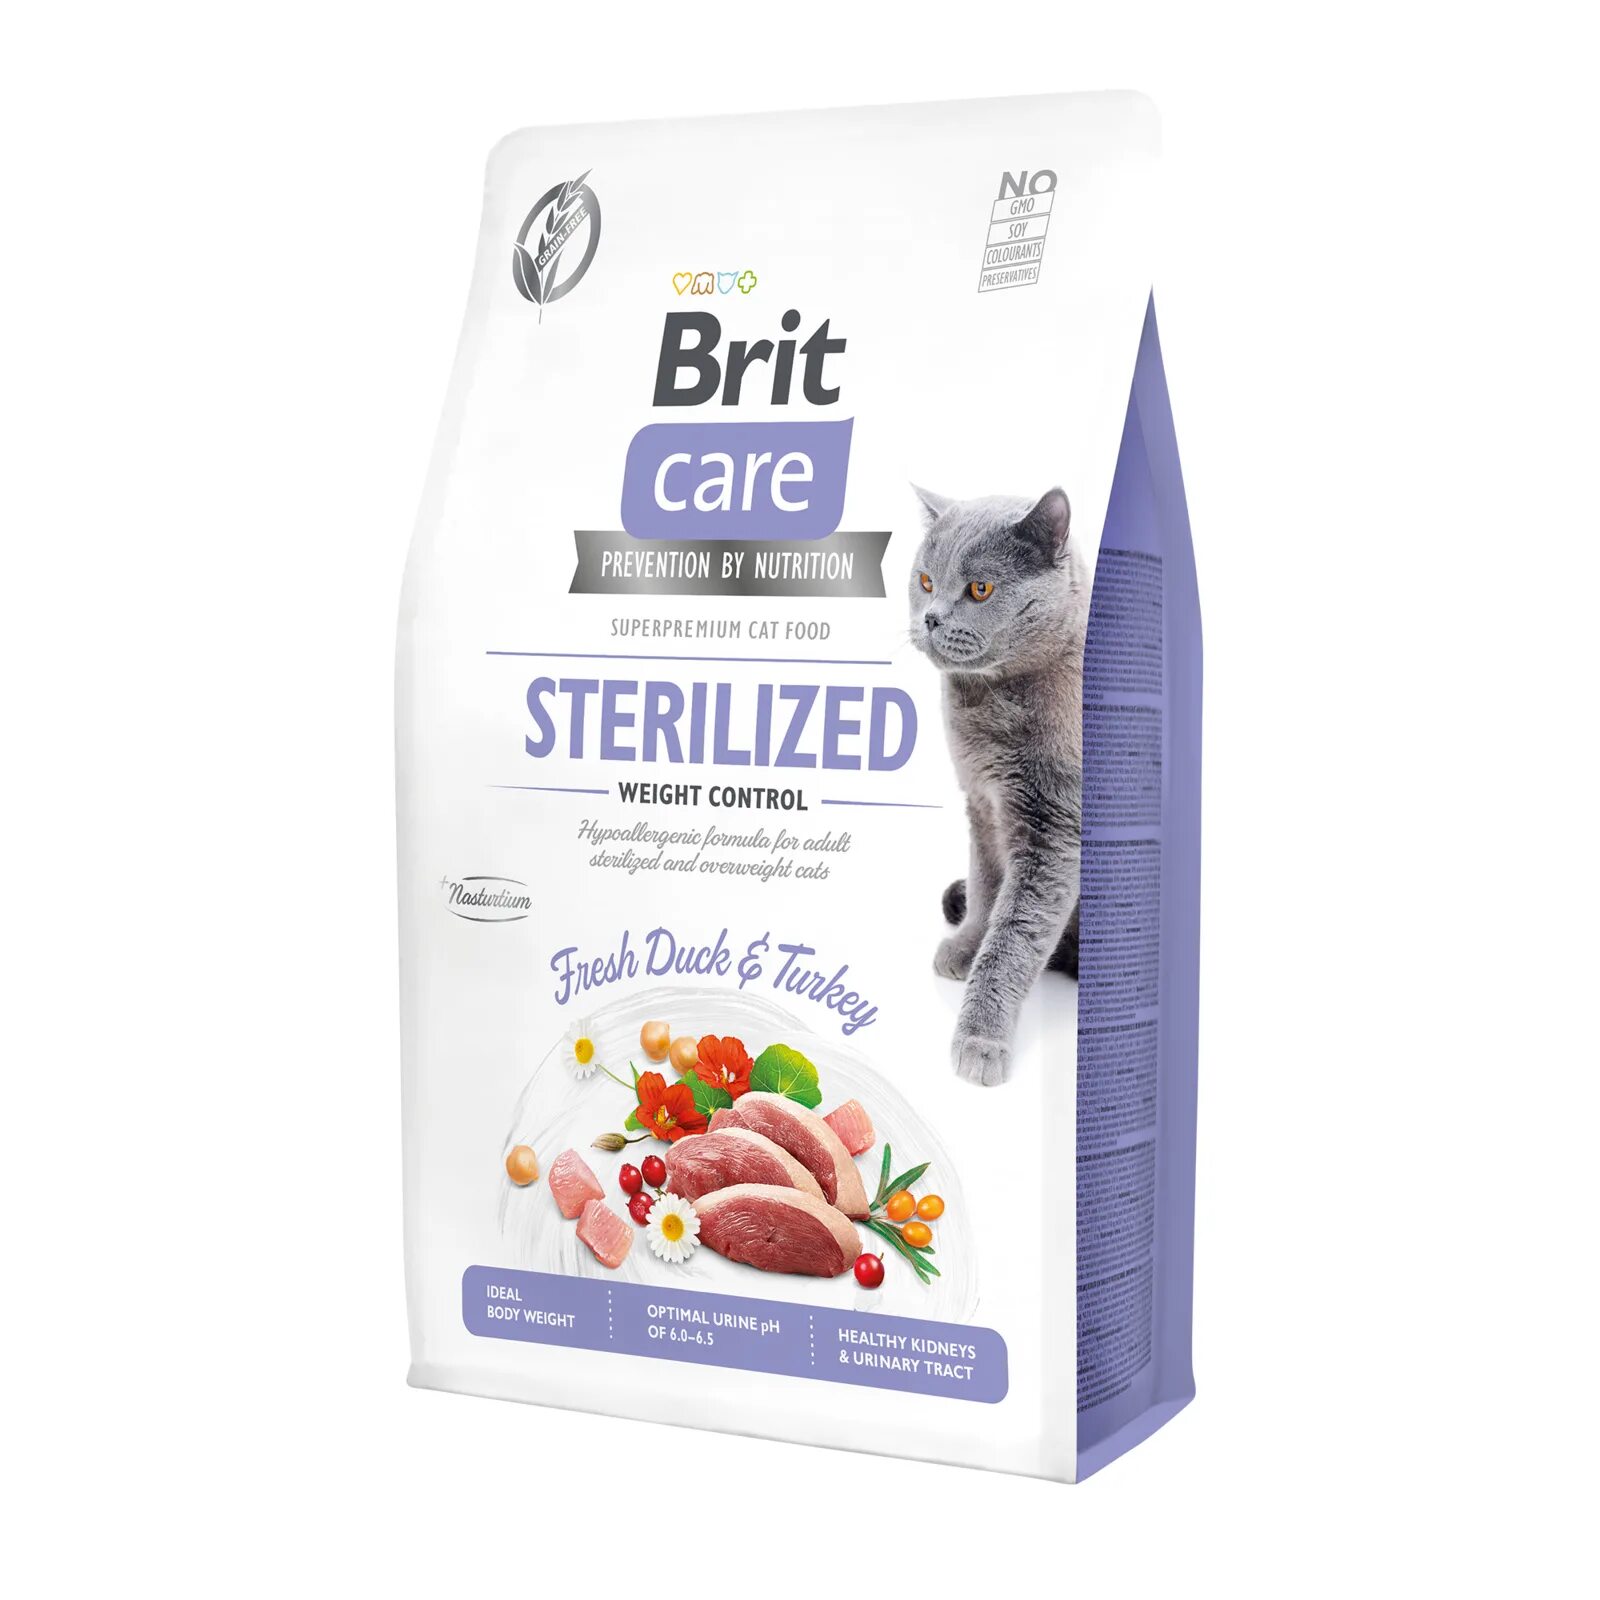 Корм для кошек Brit Care Sterilized. Brit Brit Care Cat gf Sterilized sensitive. Brit Care Cat Missy for Sterilised. Brit Sterilised корм для кошек 400 г. Брит каре для кошек